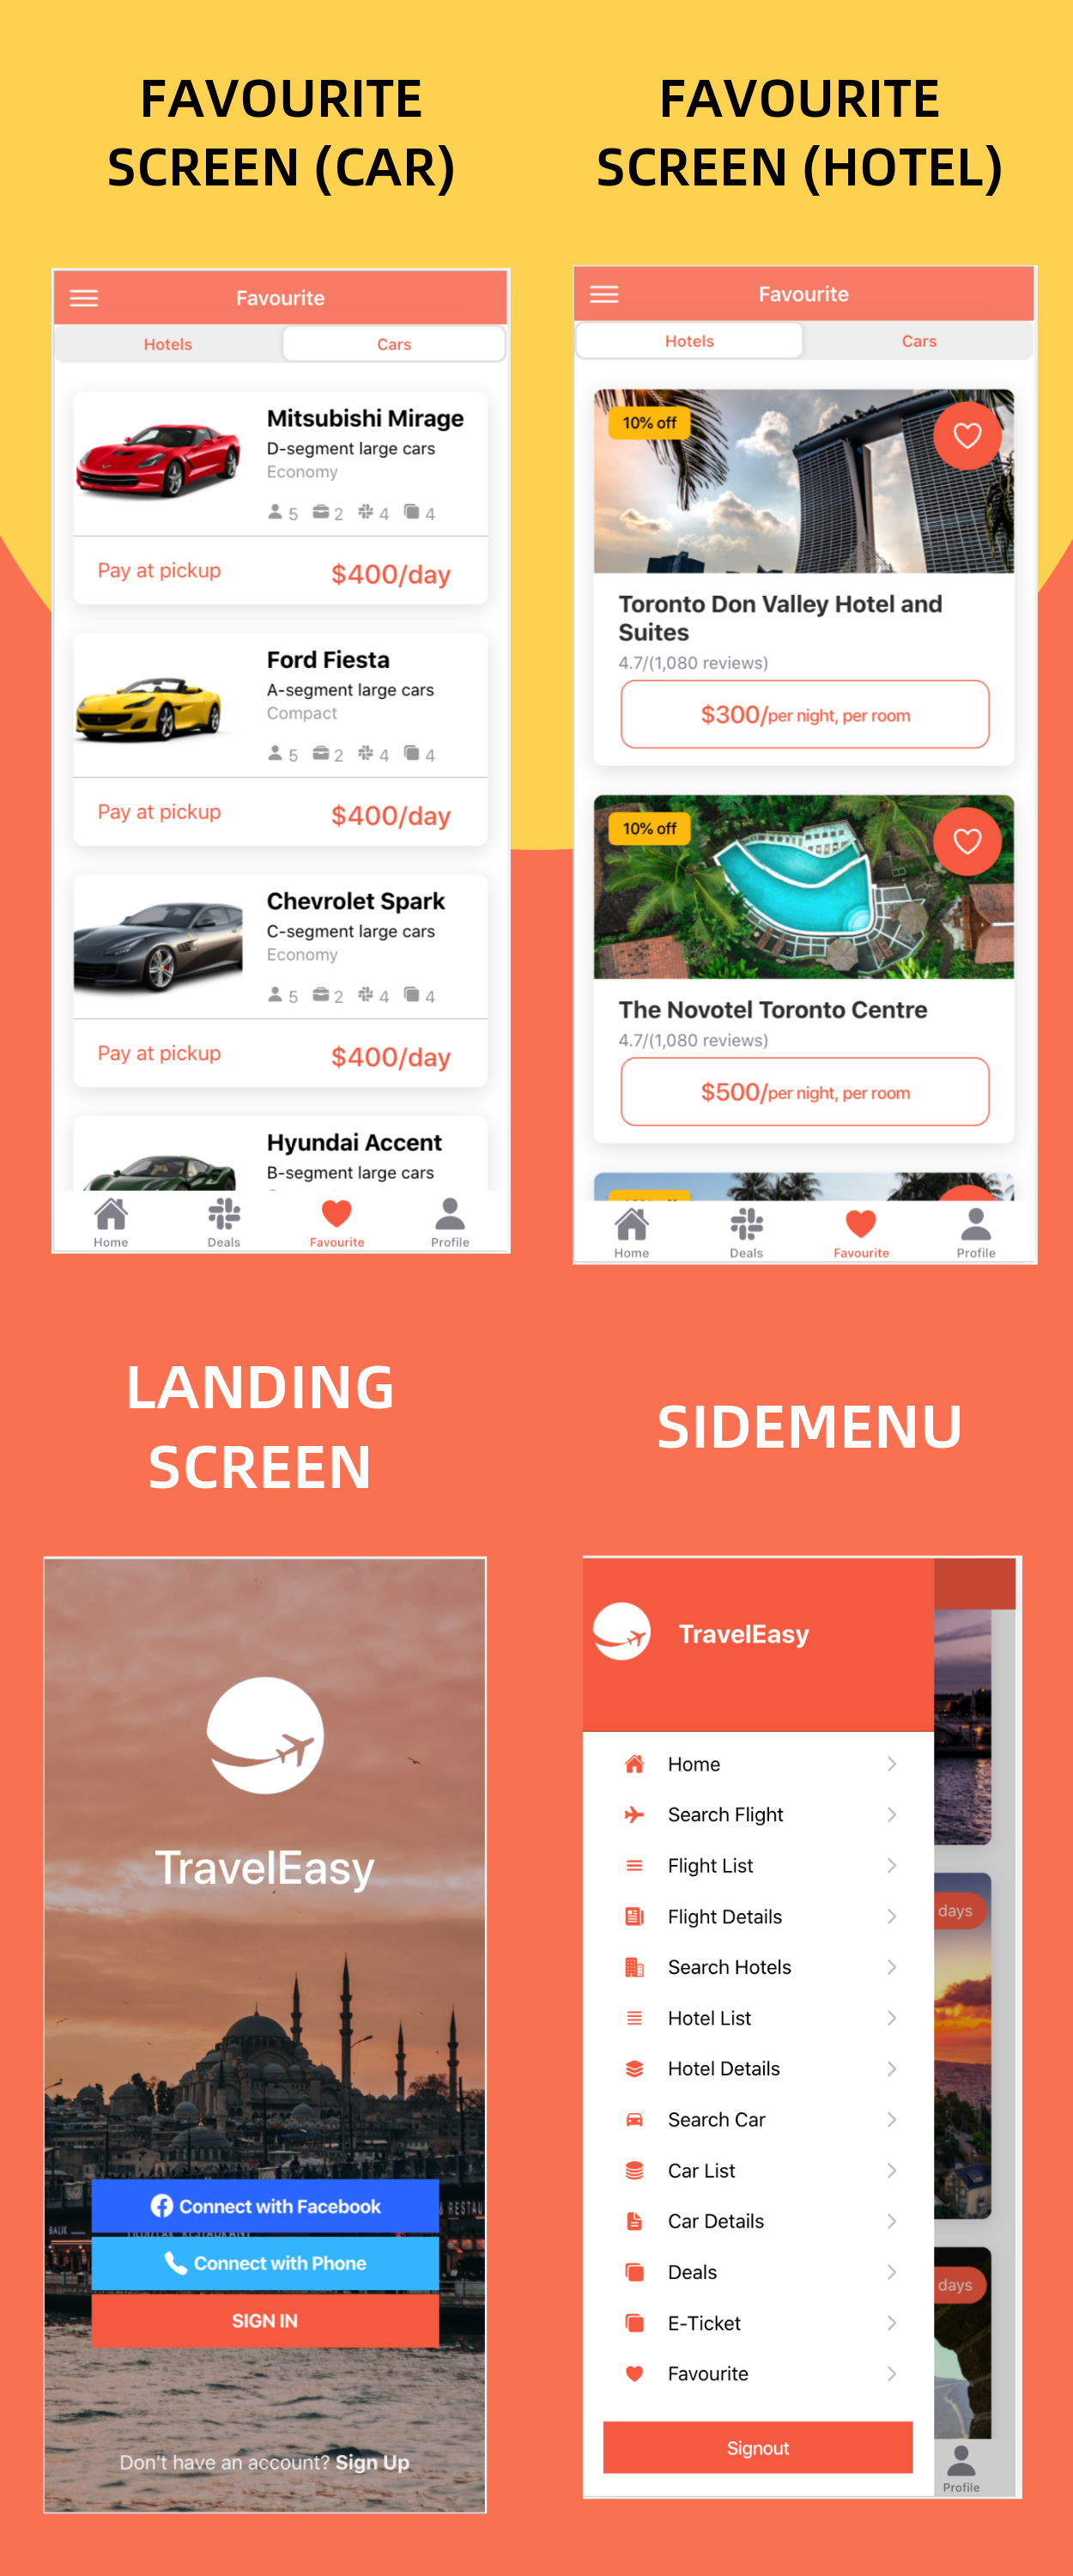 TravelEasy - A Travel Agency Theme UI App By Ionic 5 (Car, Hotel, Flight Booking) - 13